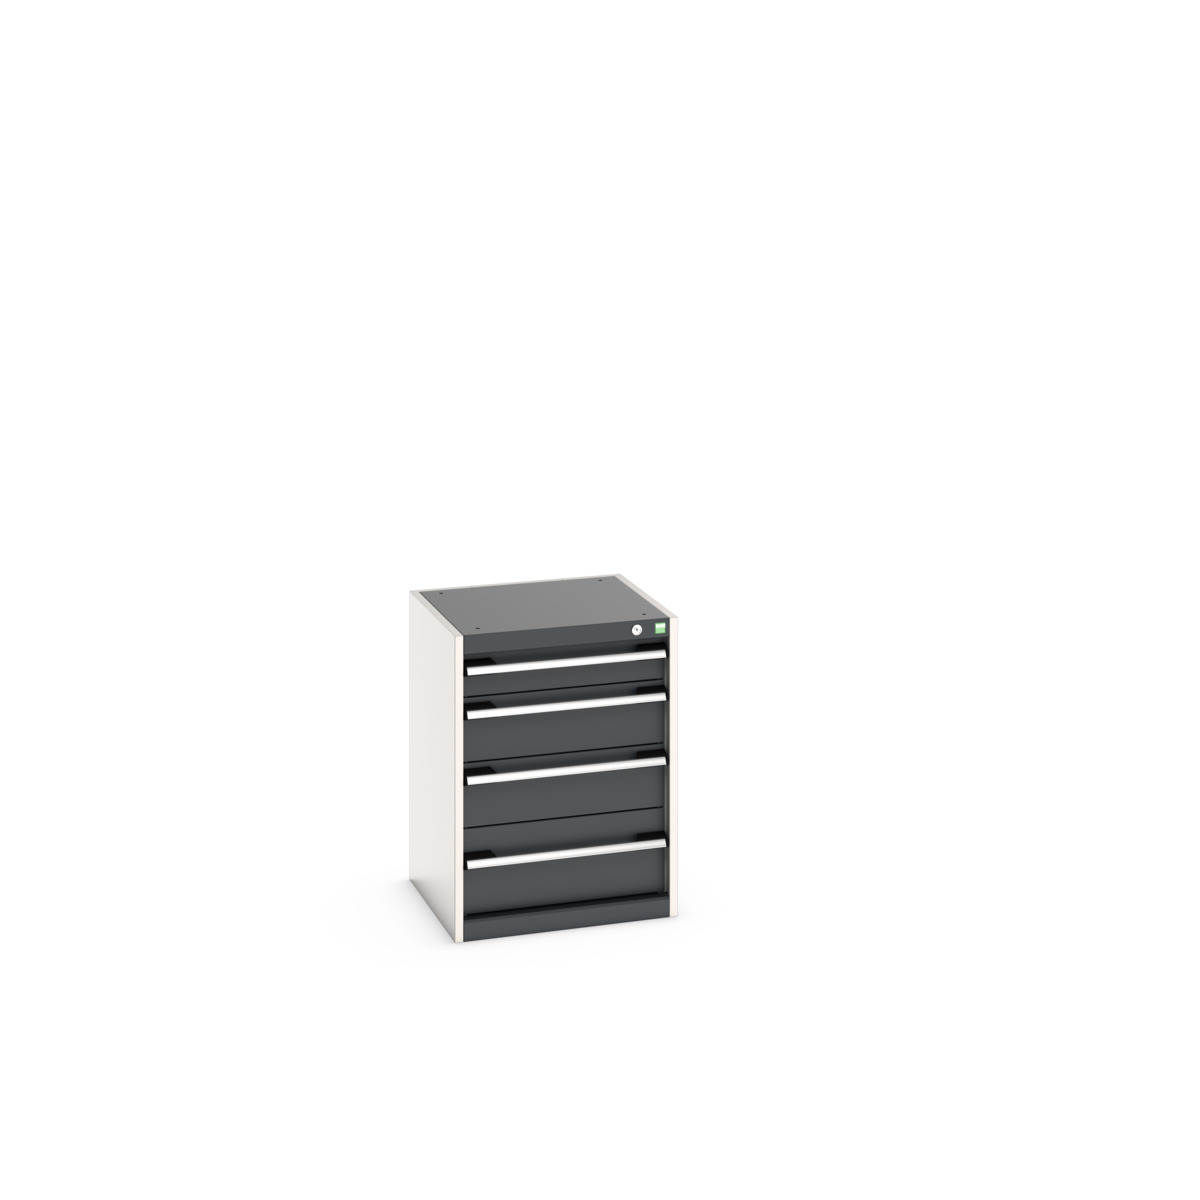 40010021. - cubio drawer cabinet